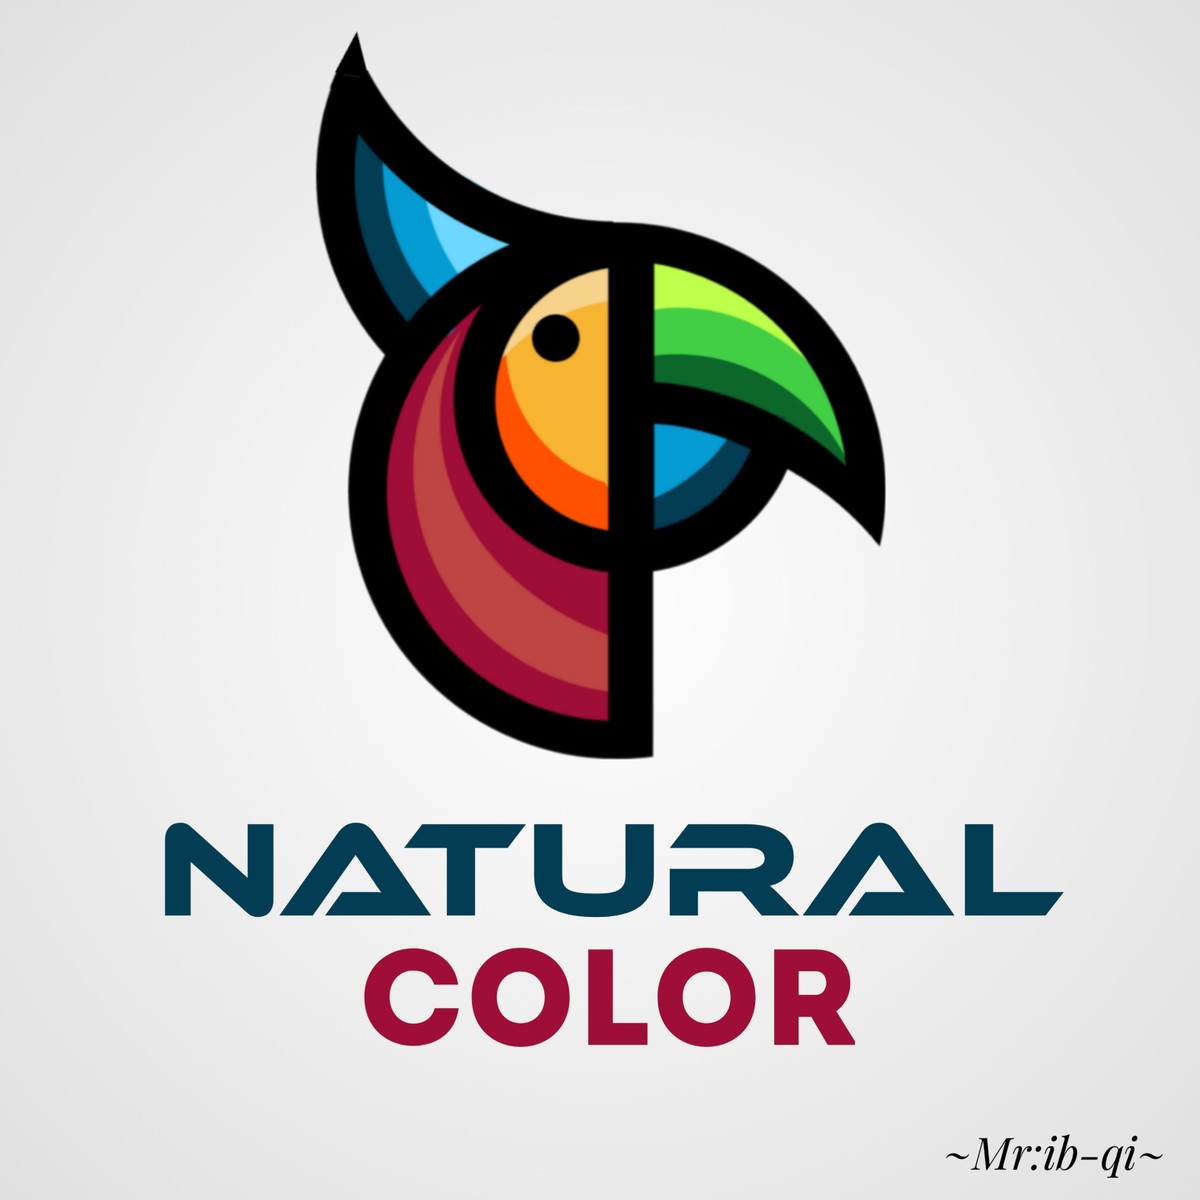 Natural color